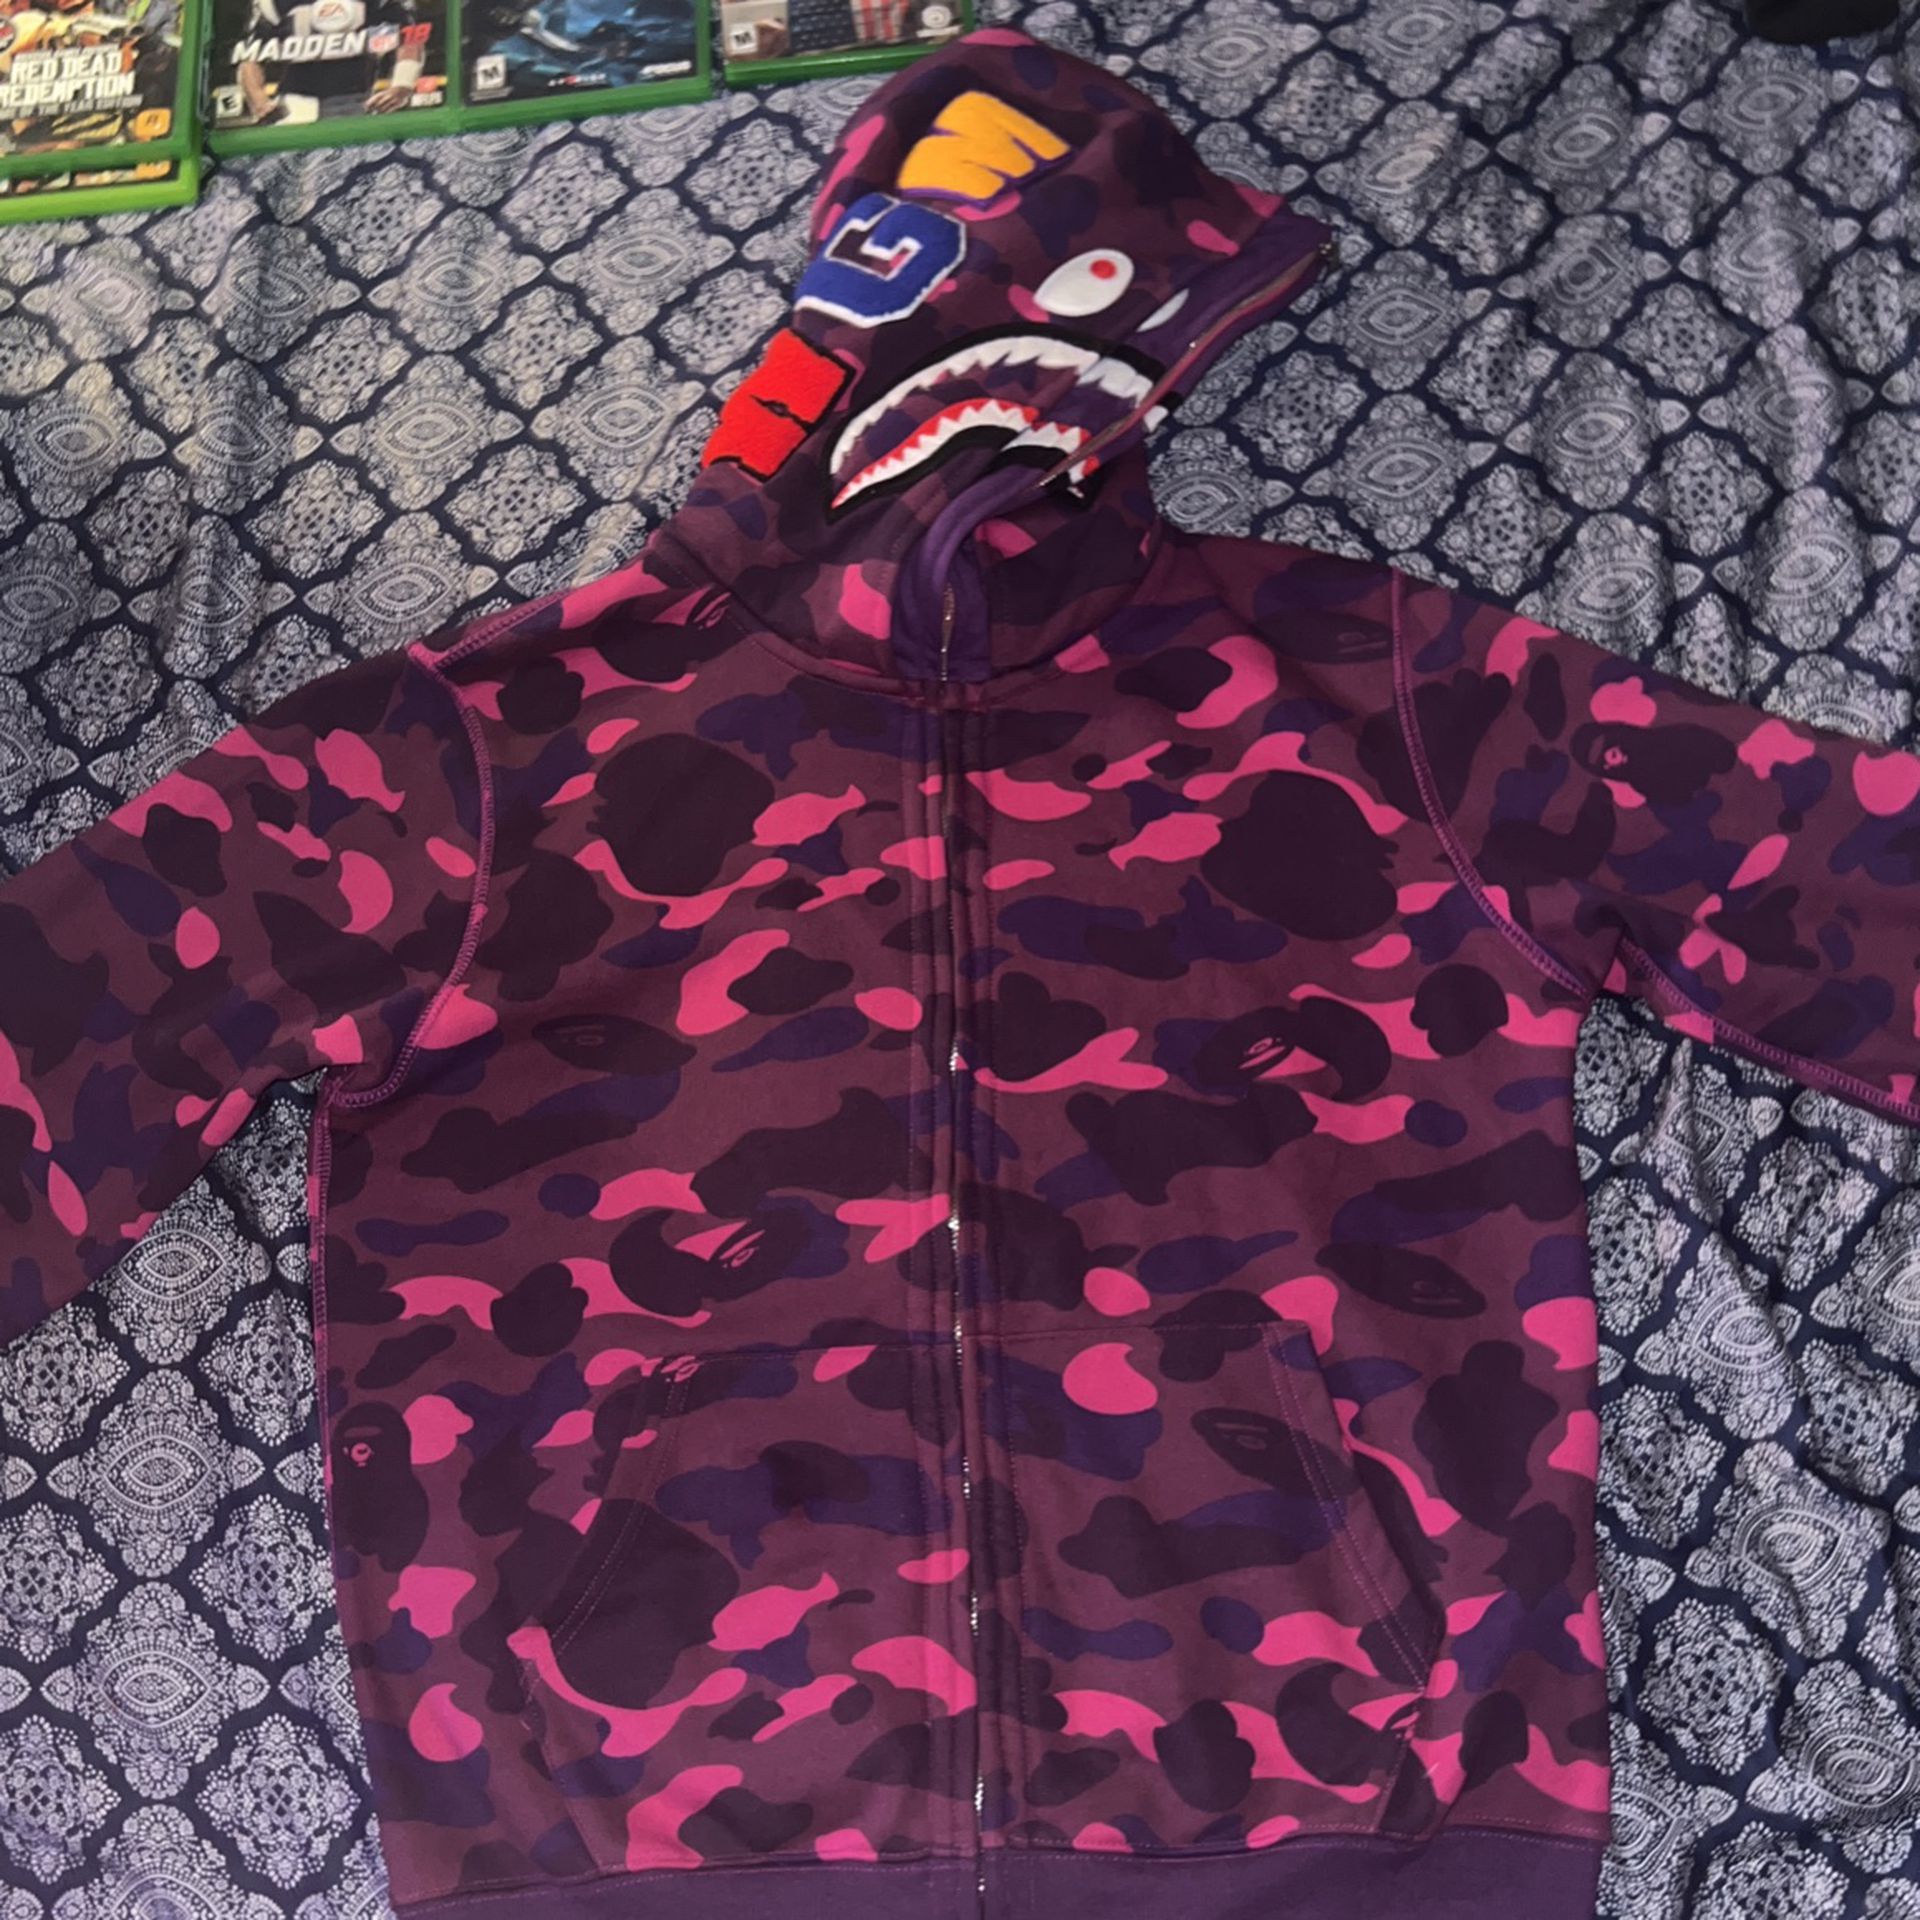 purple bape hoodie 